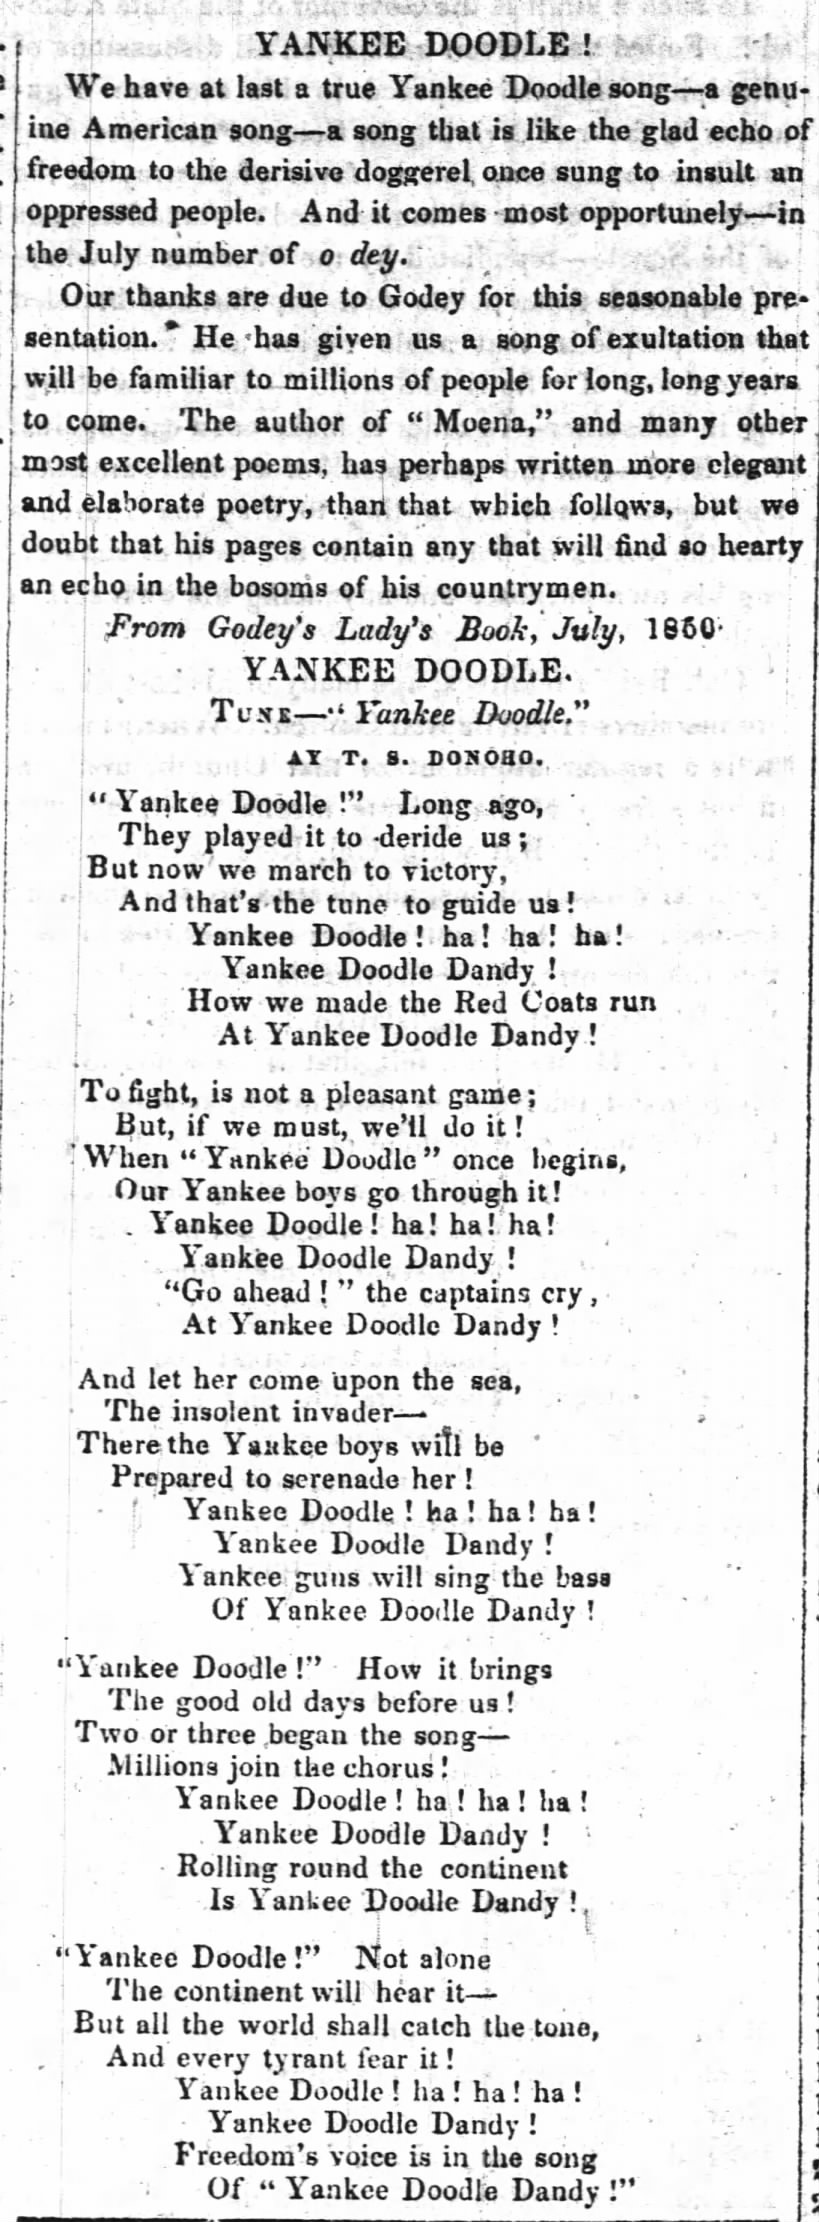 Revised Yankee Doodle